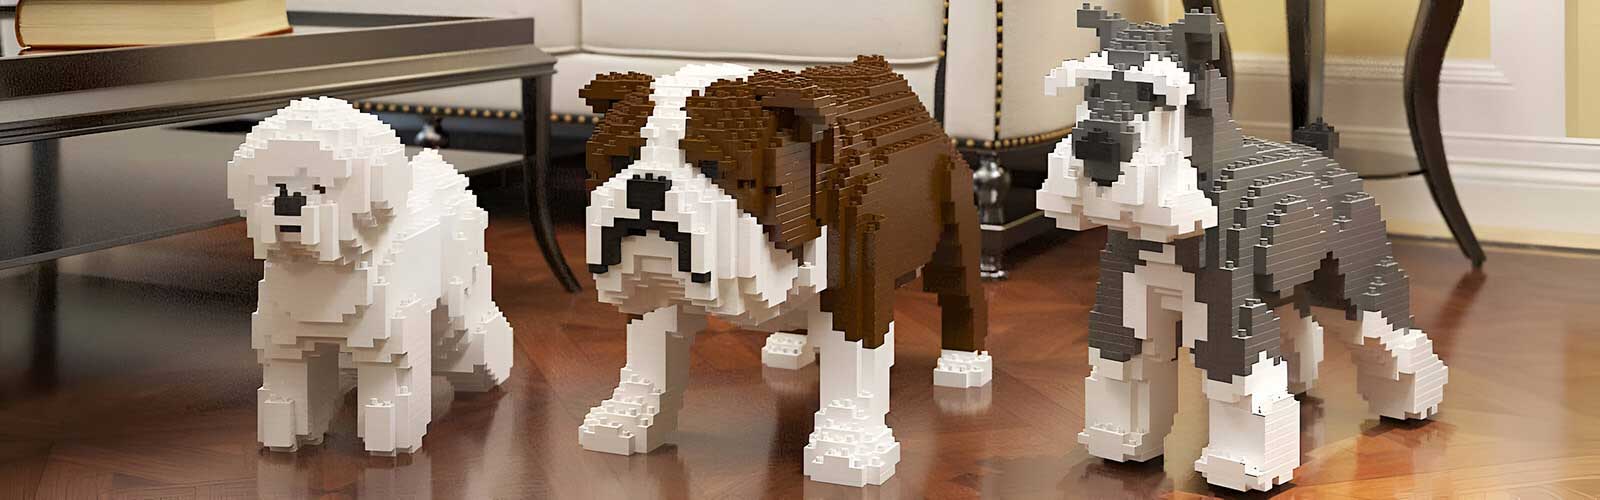 Jekca Lego style Dog building sets. DIY Pixel Dog Model Kits